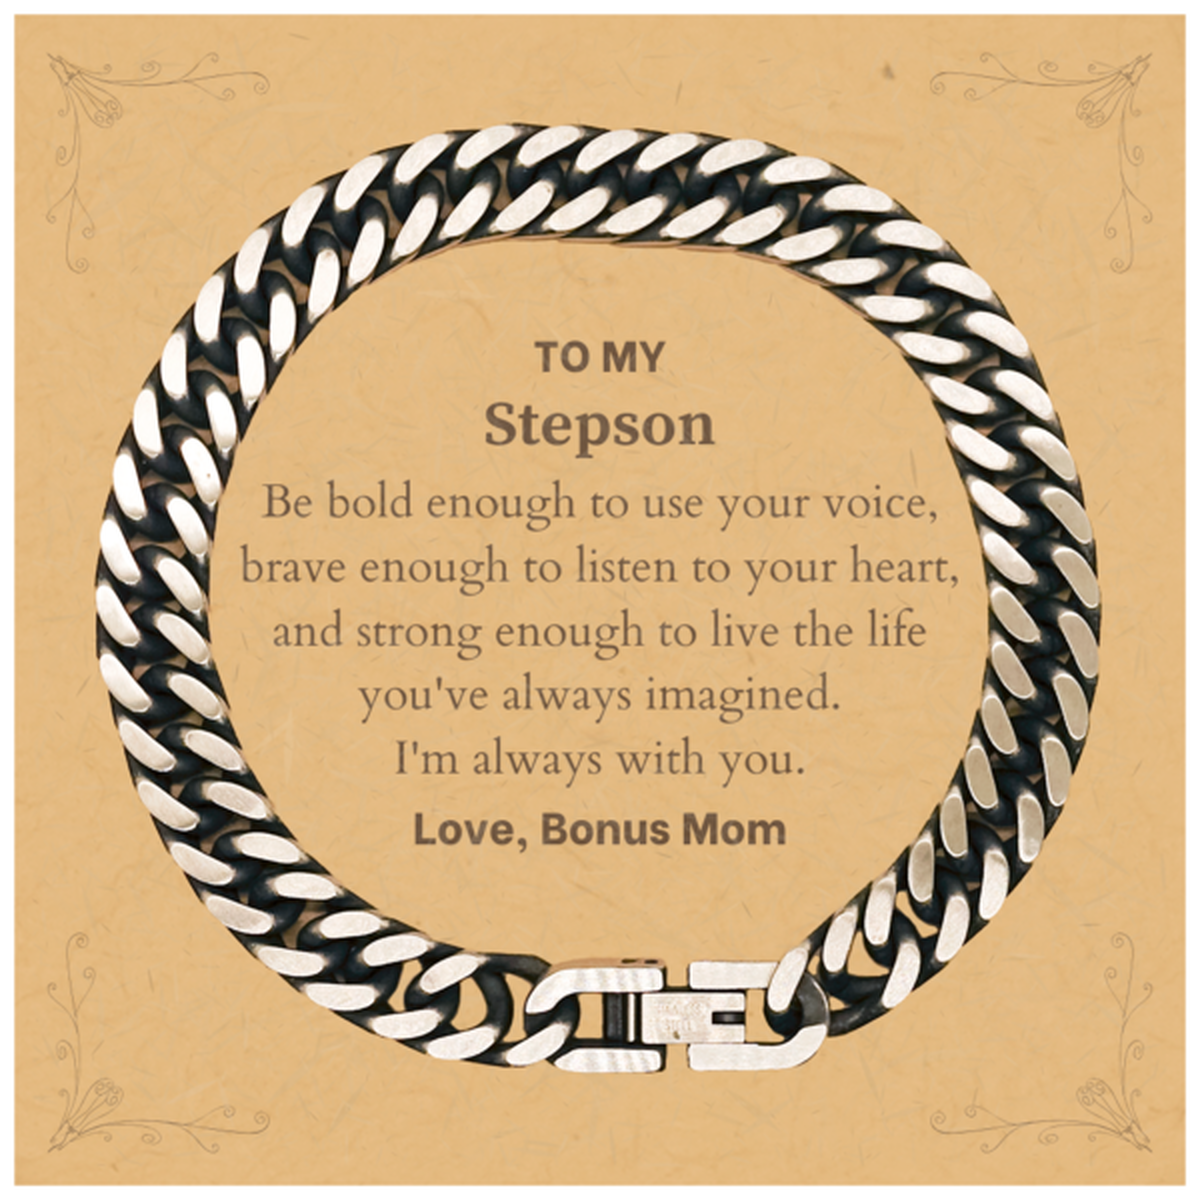 Keepsake Stepson Cuban Link Chain Bracelet Gift Idea Graduation Christmas Birthday Stepson from Bonus Mom, Stepson Be bold enough to use your voice, brave enough to listen to your heart. Love, Bonus Mom